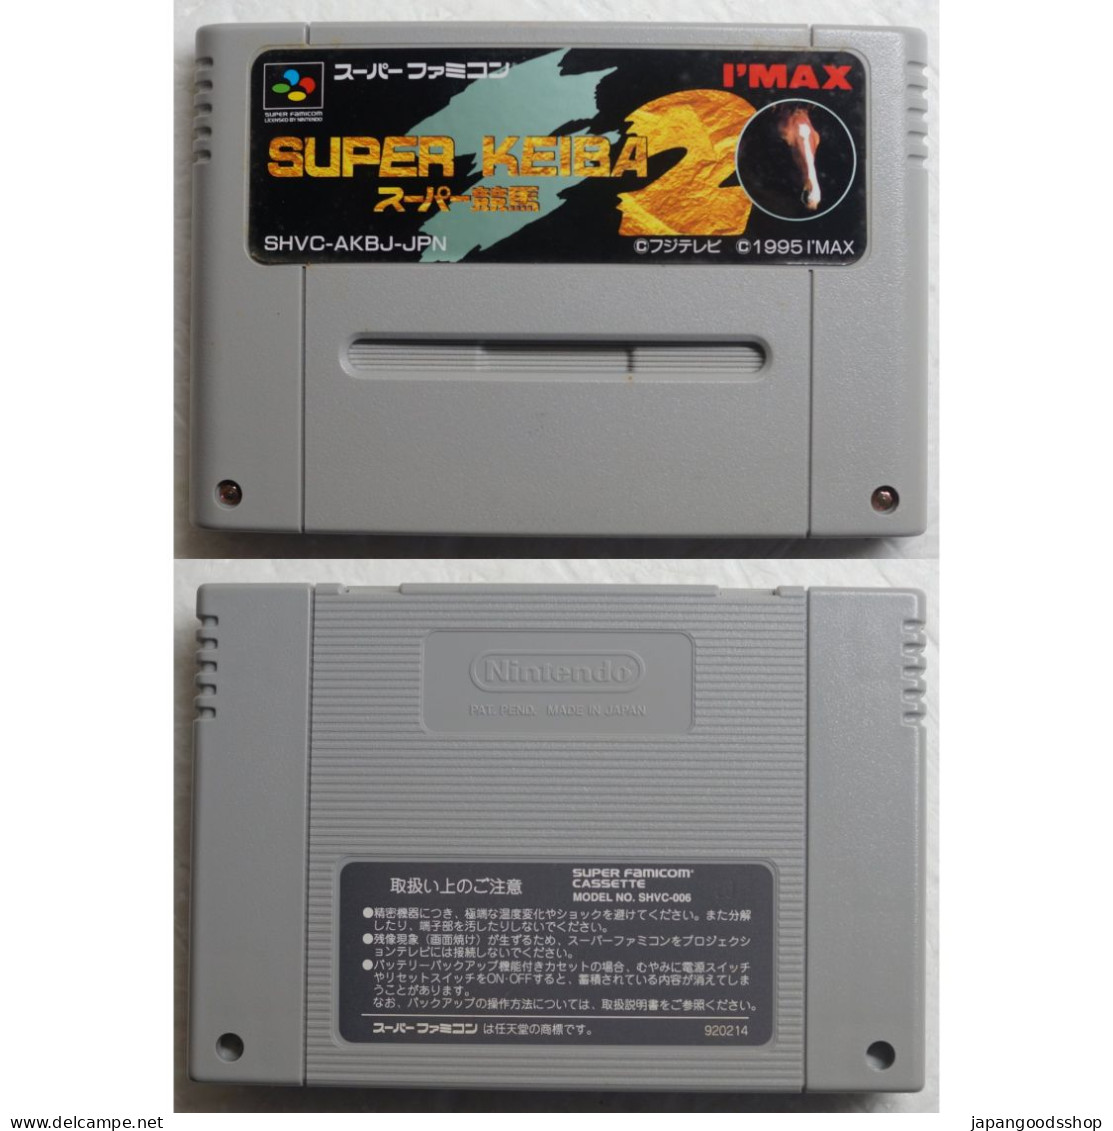 Super Famicom Super Keiba 2  SHVC-AKBJ-JPN - Super Famicom